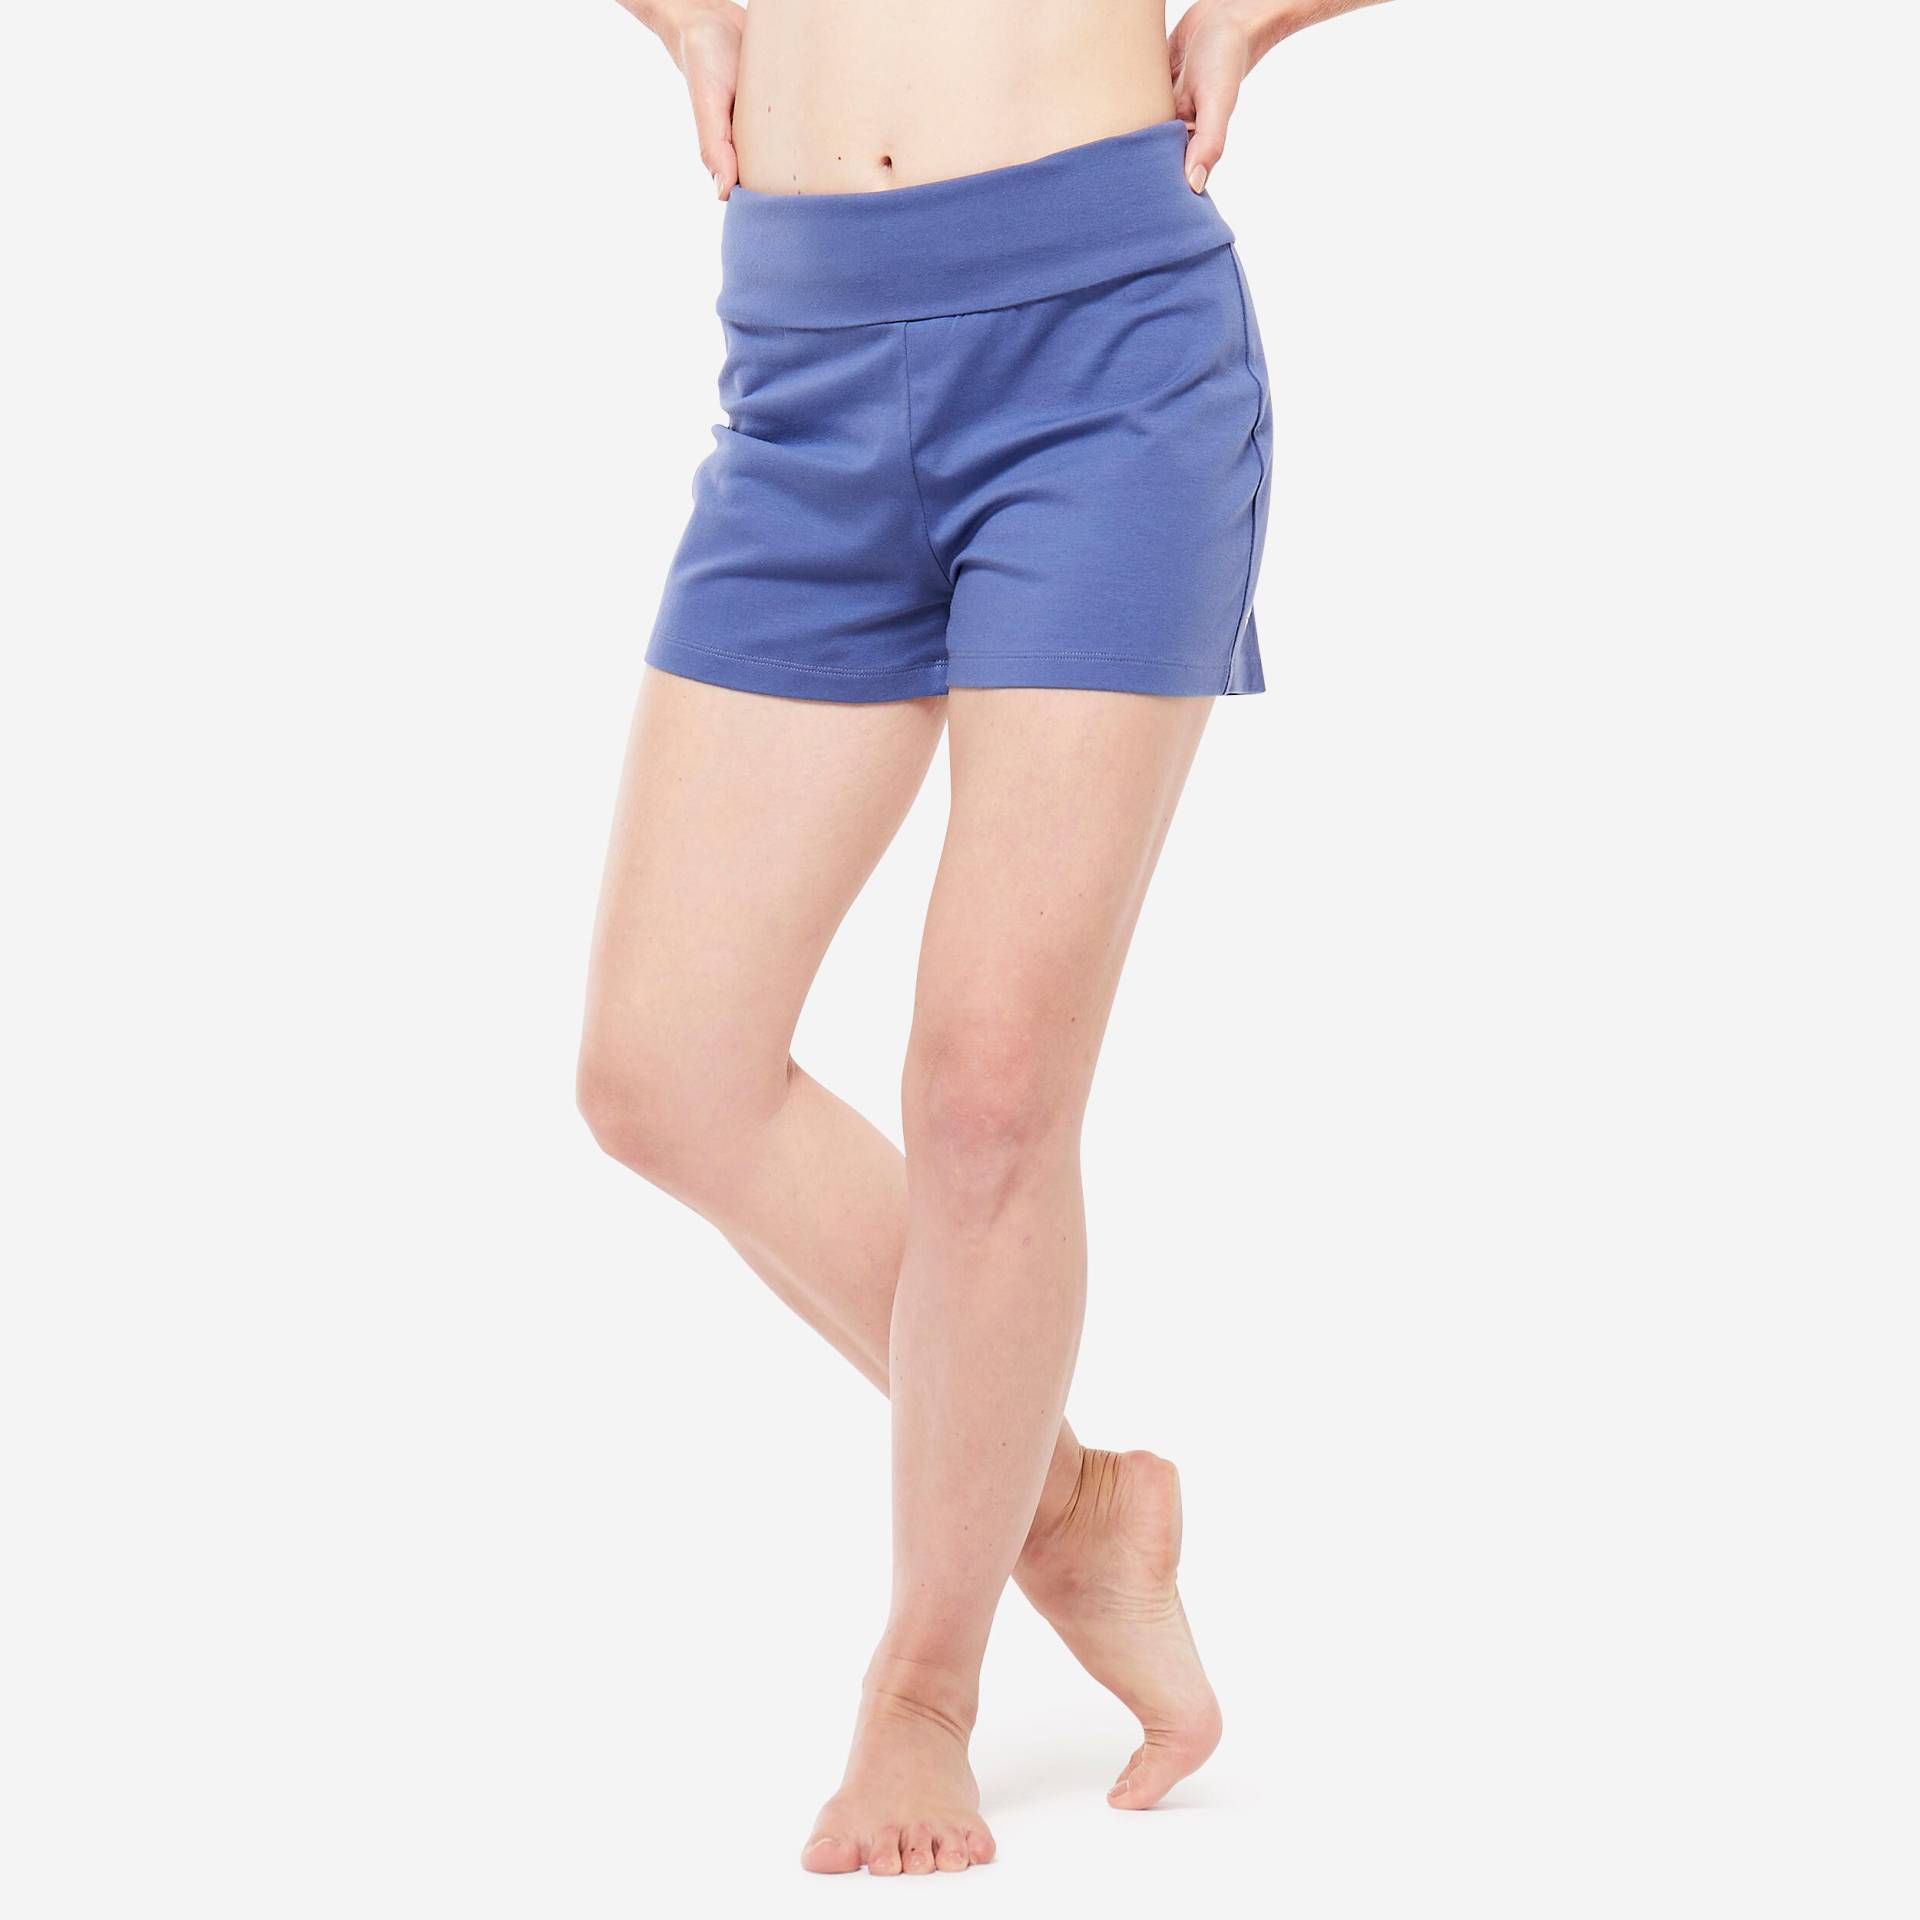 Shorts Yoga Damen Baumwolle - blau von KIMJALY